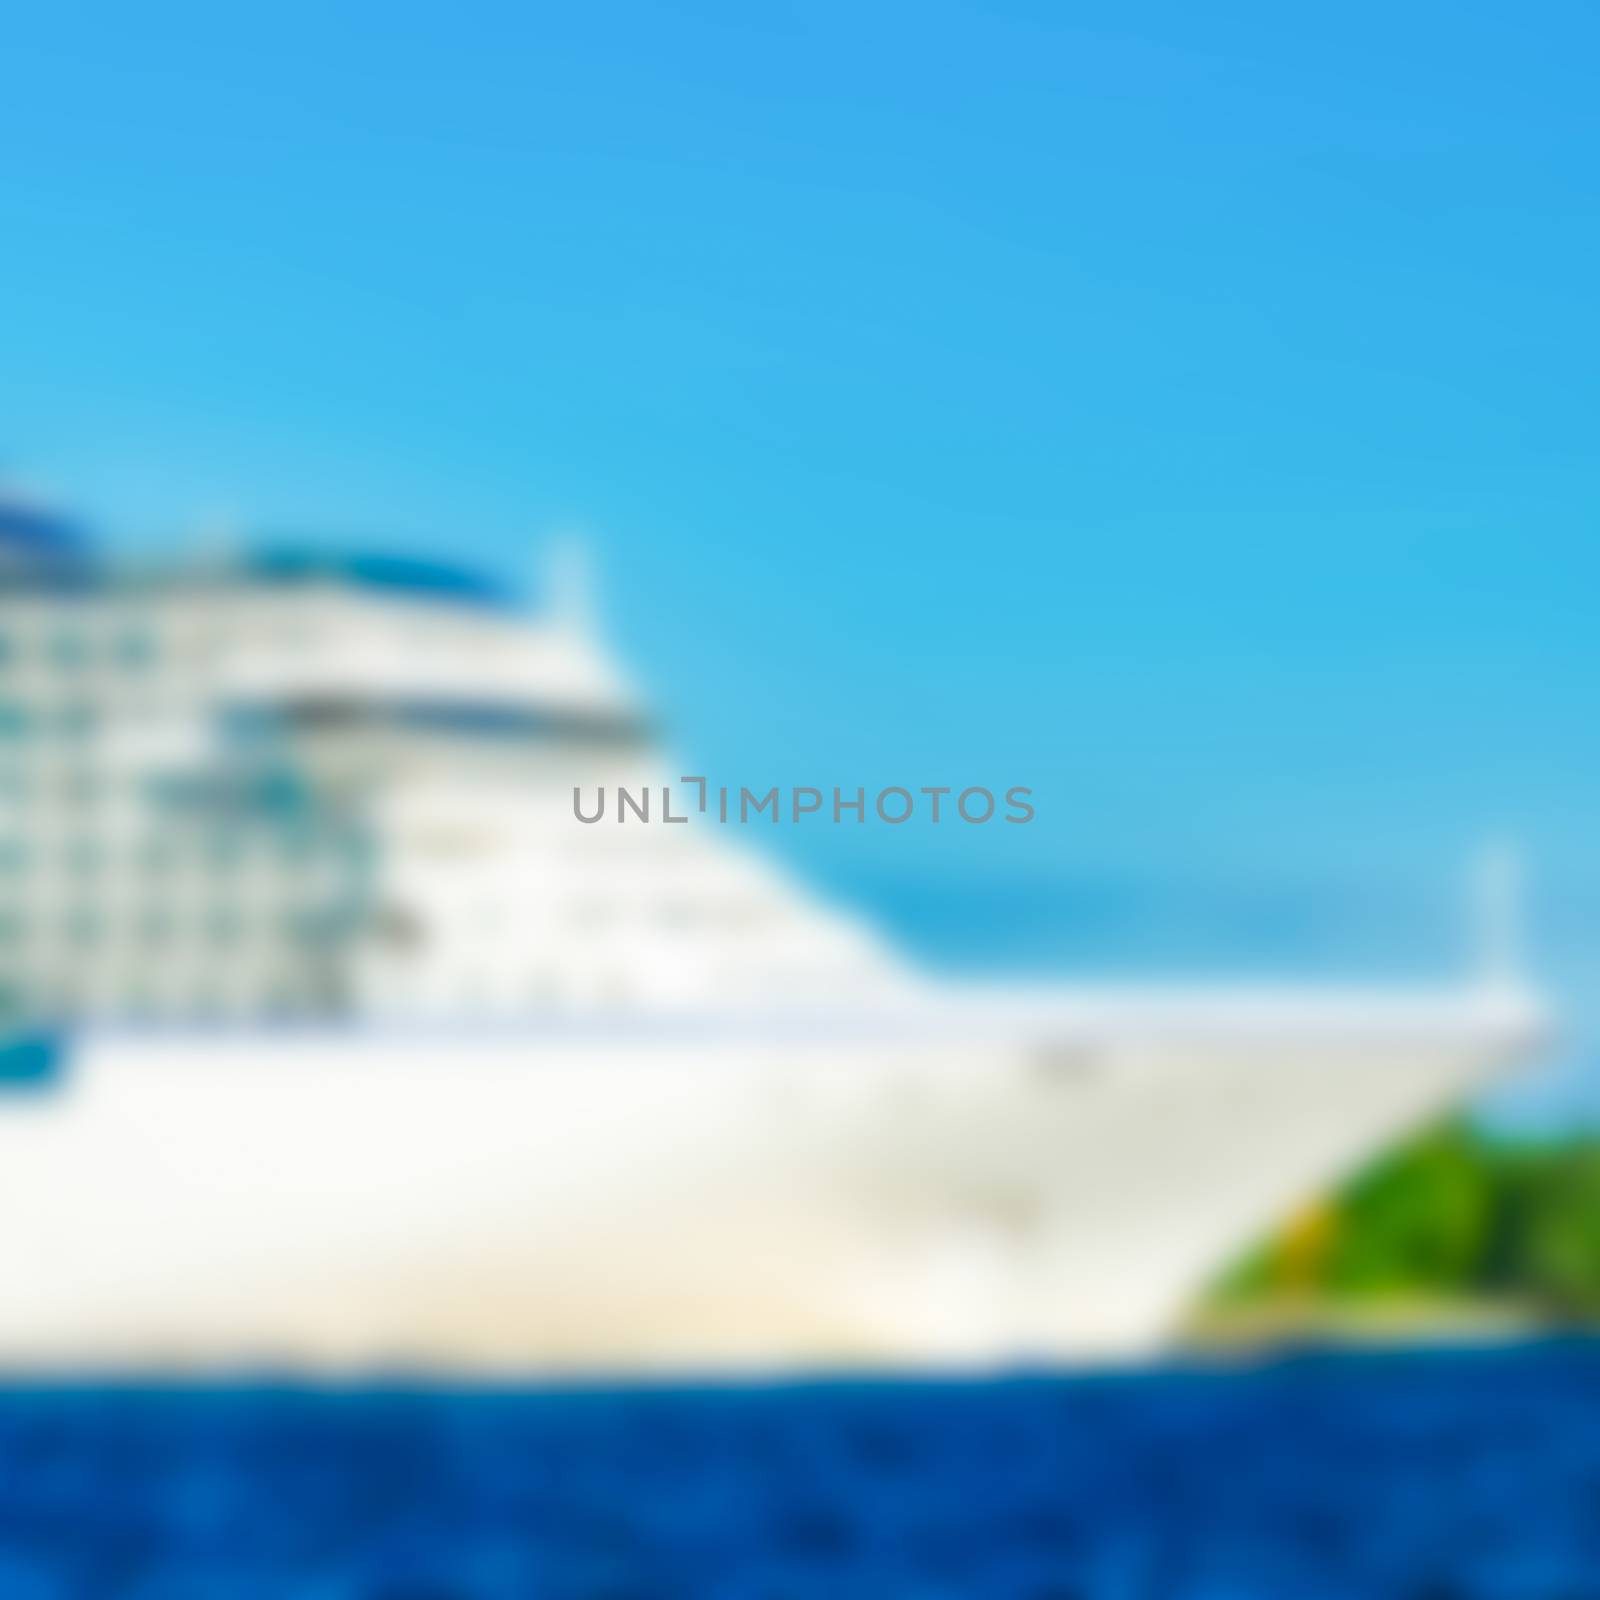 Cruise liner - soft lens bokeh image. Defocused background